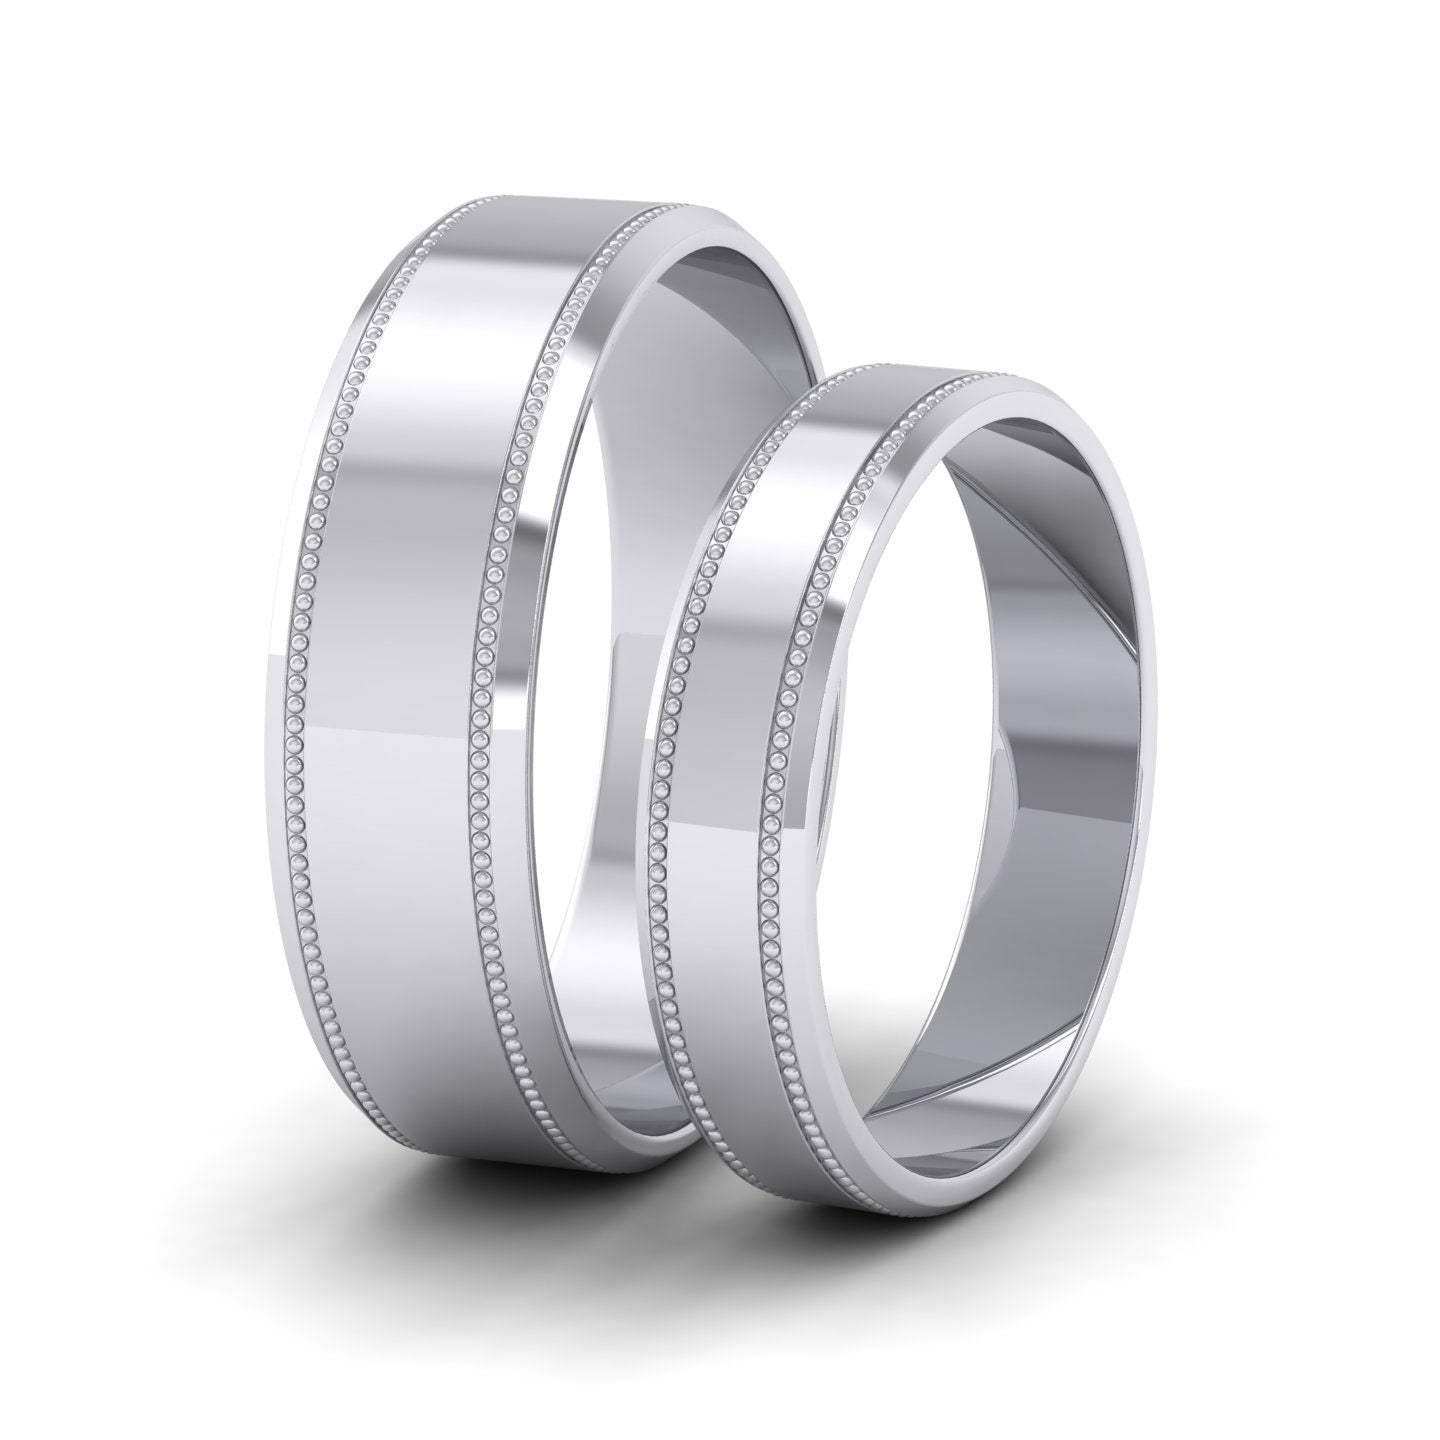 Bevelled Edge And Millgrain Pattern 500 Palladium 6mm Flat Wedding Ring